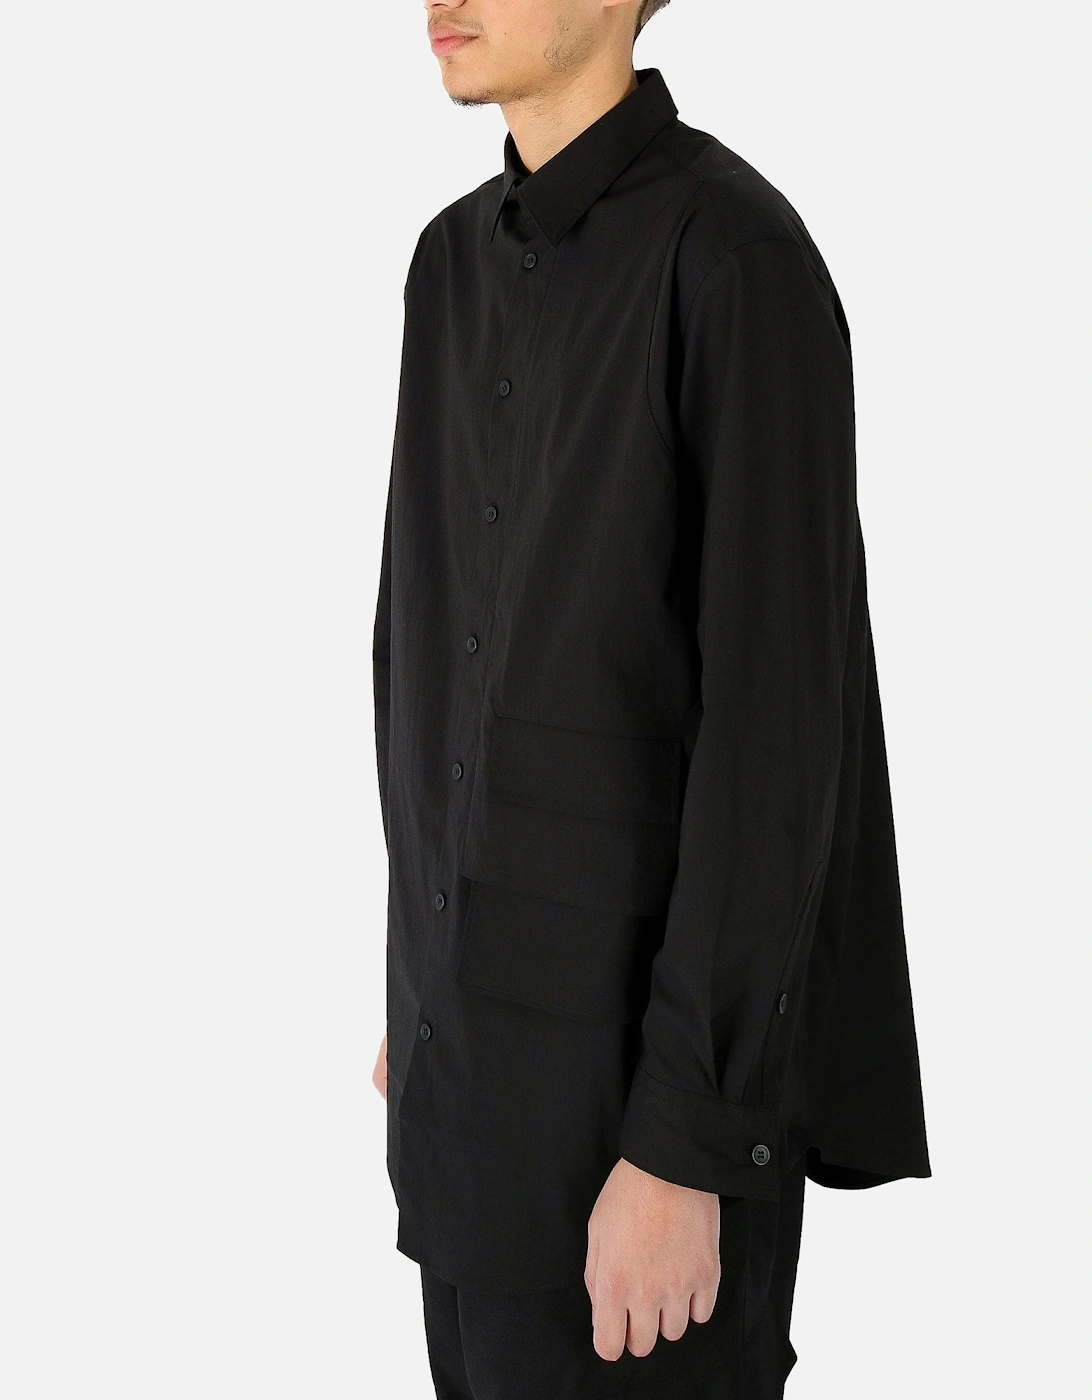 Pocket Detail Oversized Black Shirt